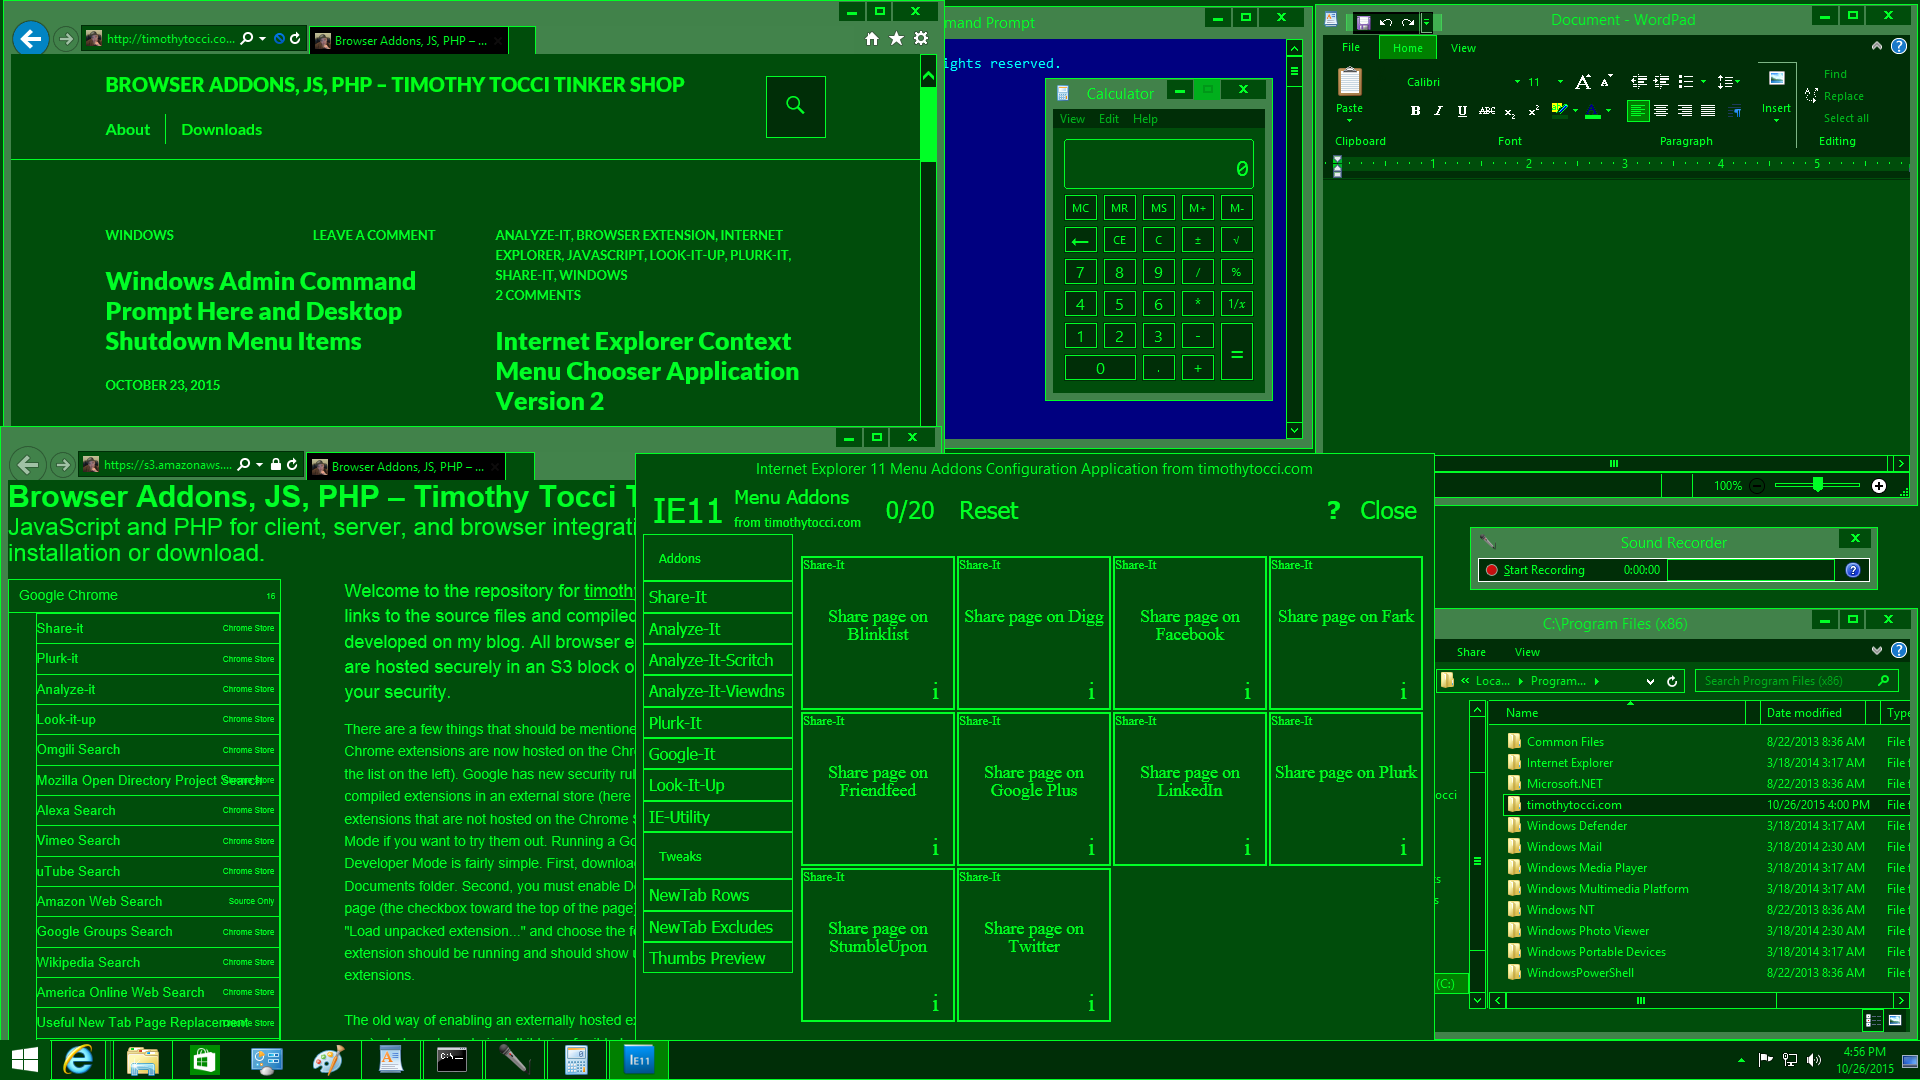 Windows 8 Desktop Apps